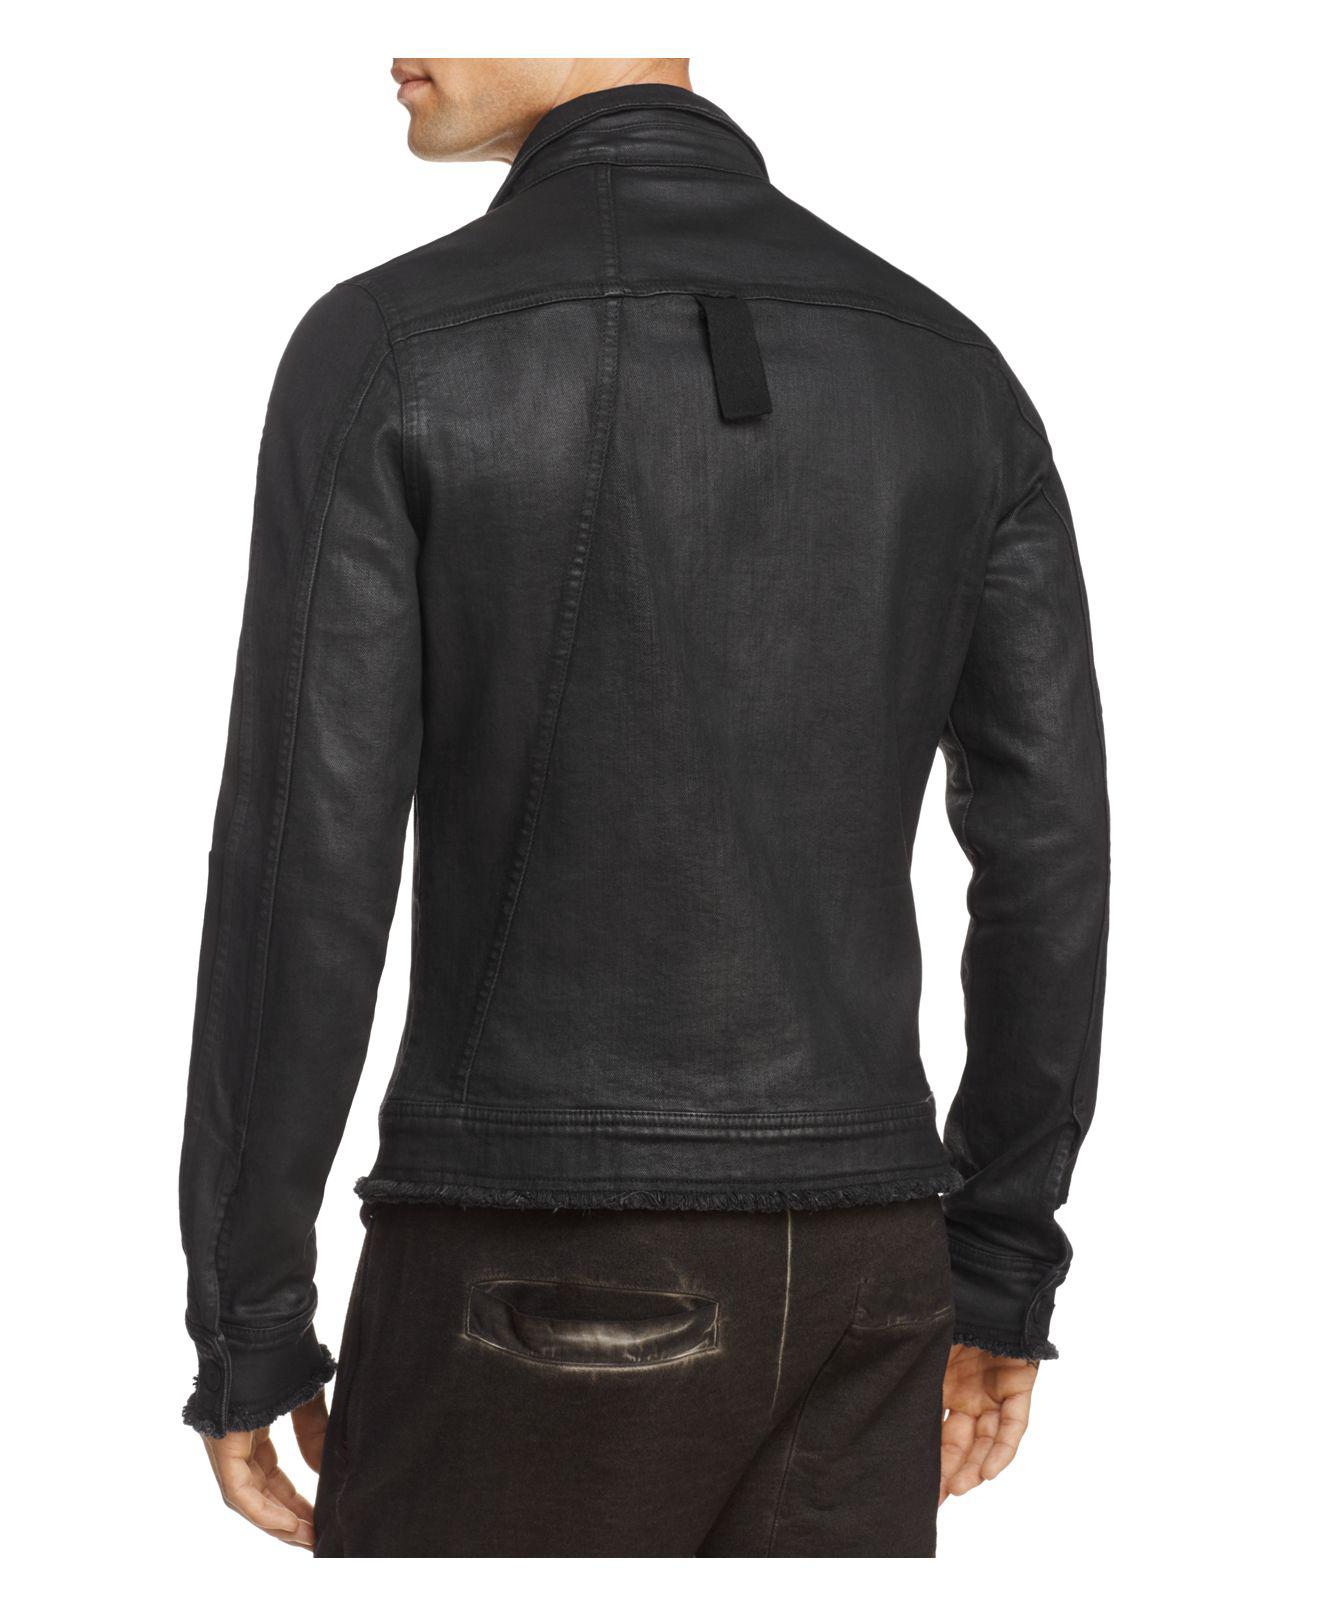 Lyst - Thom Krom Frayed Waxed Denim Jacket in Black for Men